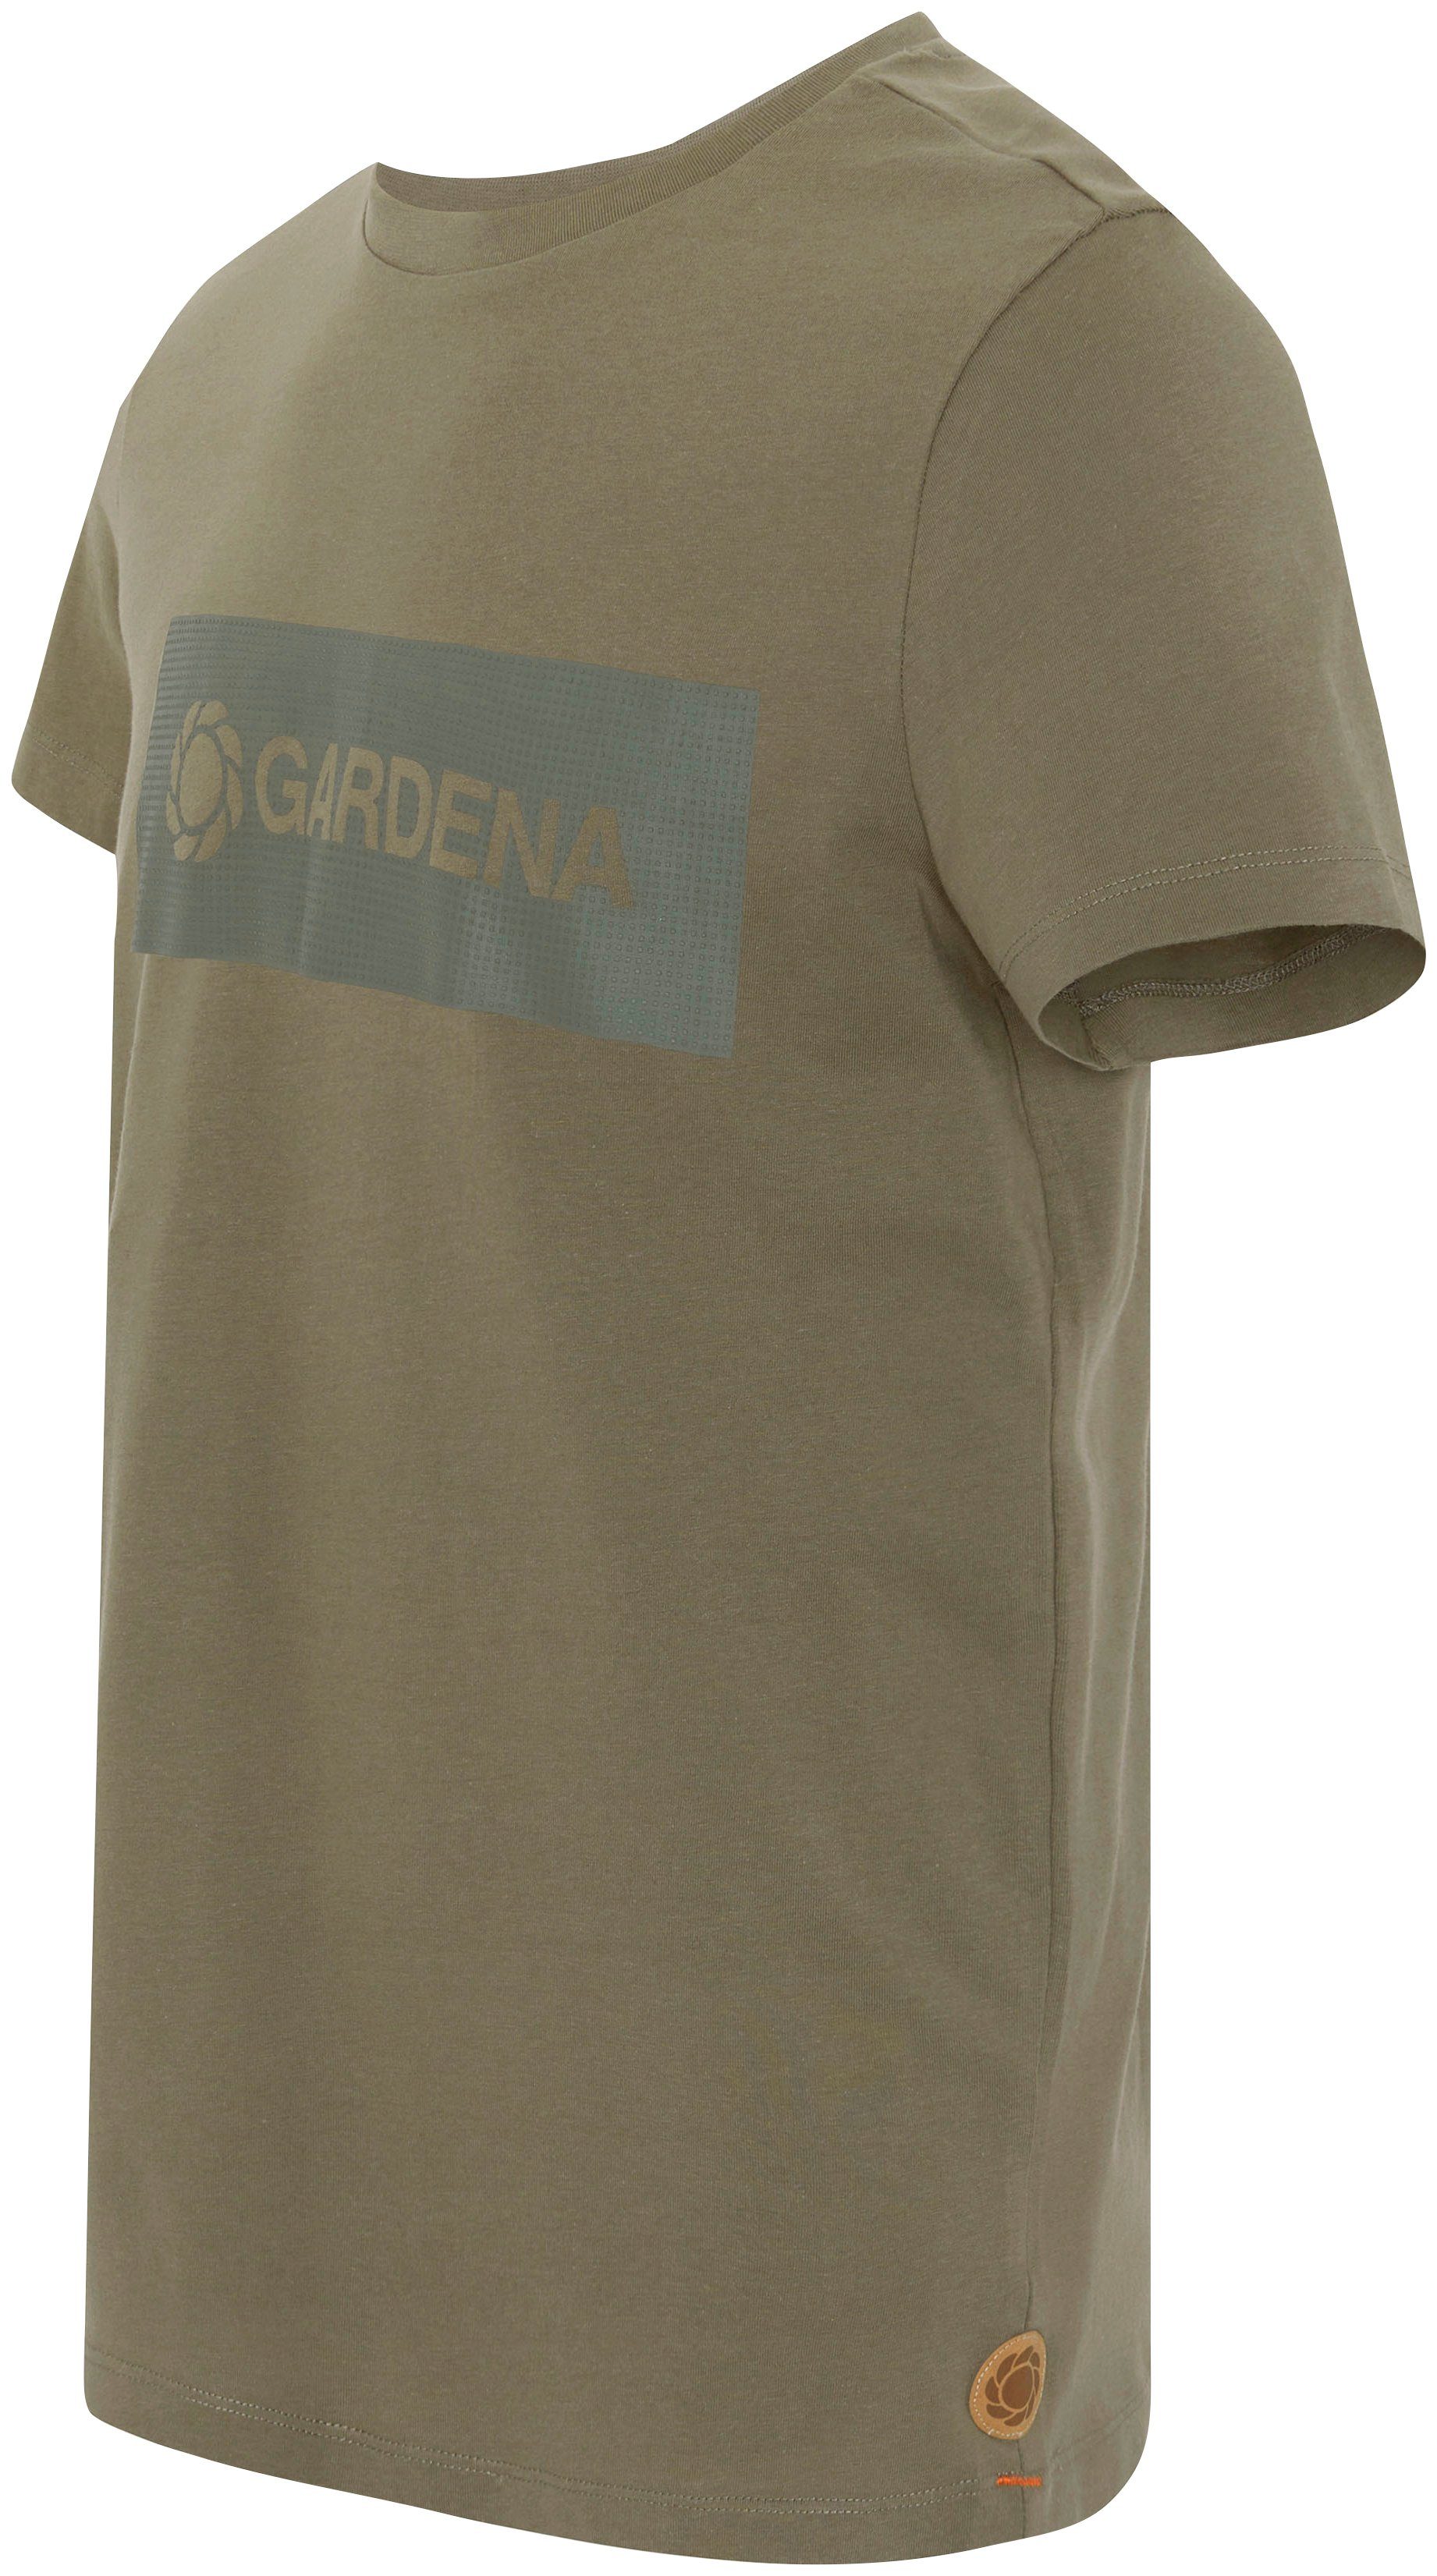 GARDENA T-Shirt Dusty Olive Gardena-Logodruck mit